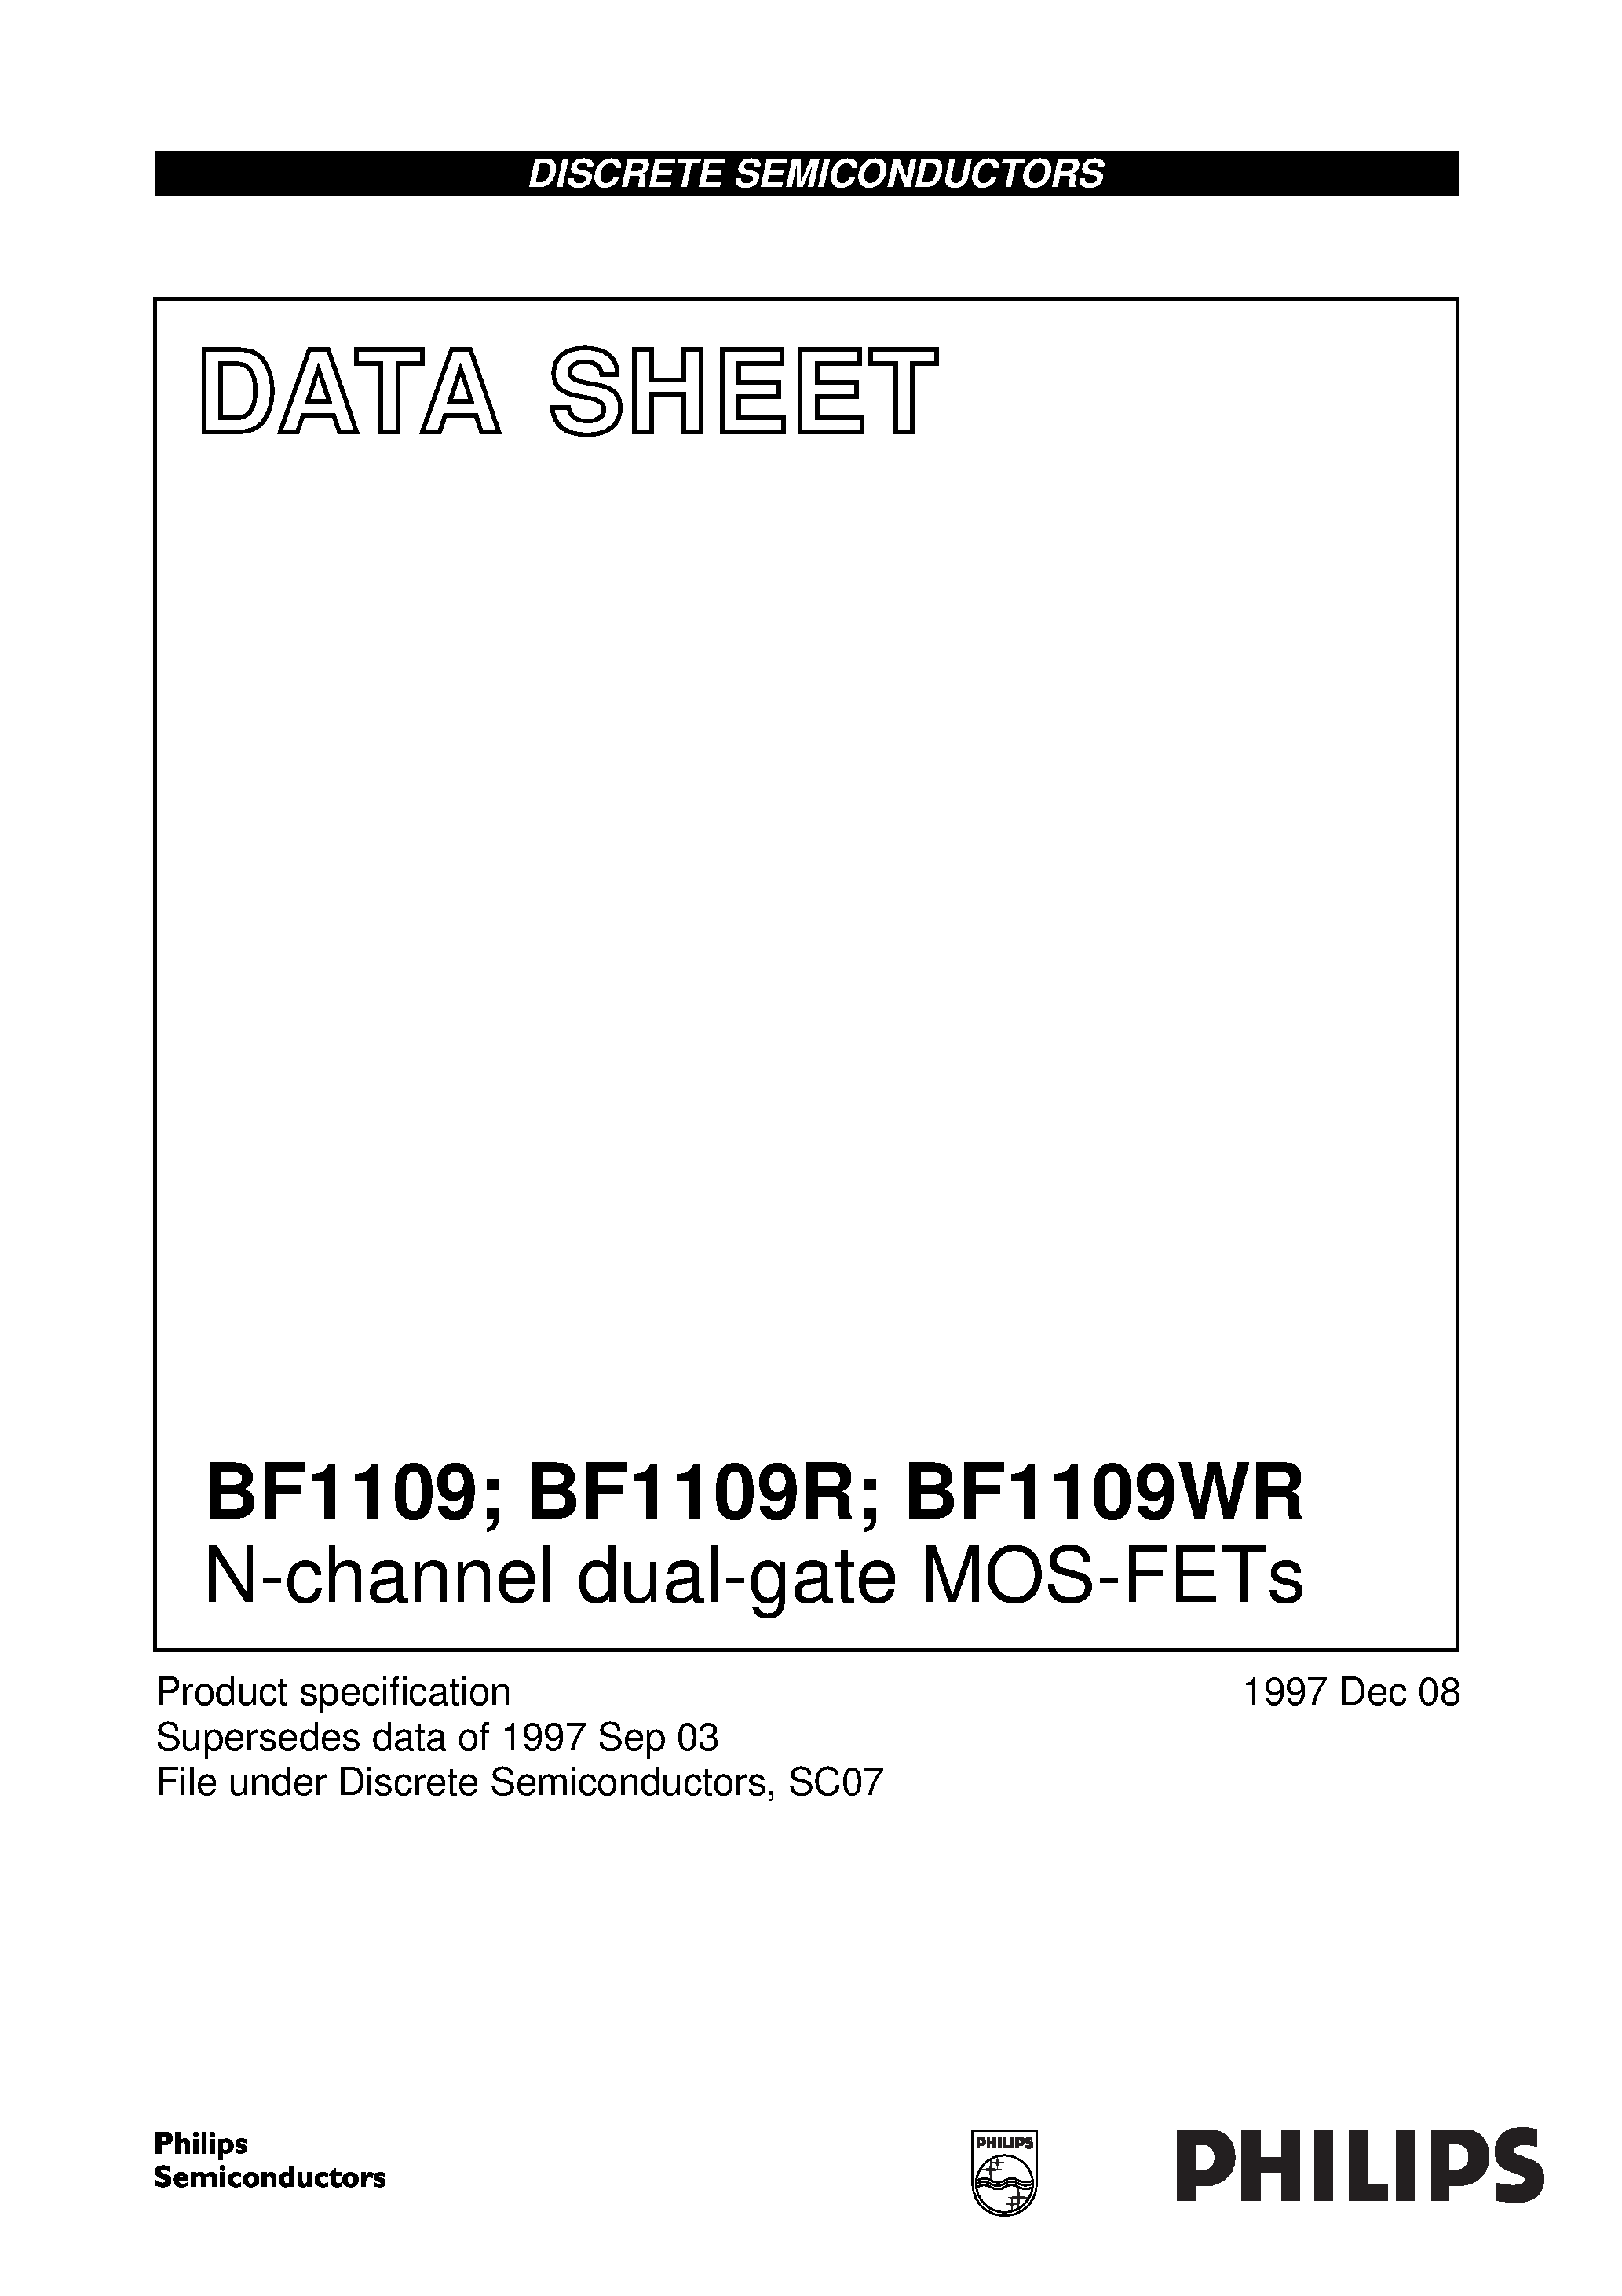 Даташит BF1109 - N-channel dual-gate MOS-FETs страница 1